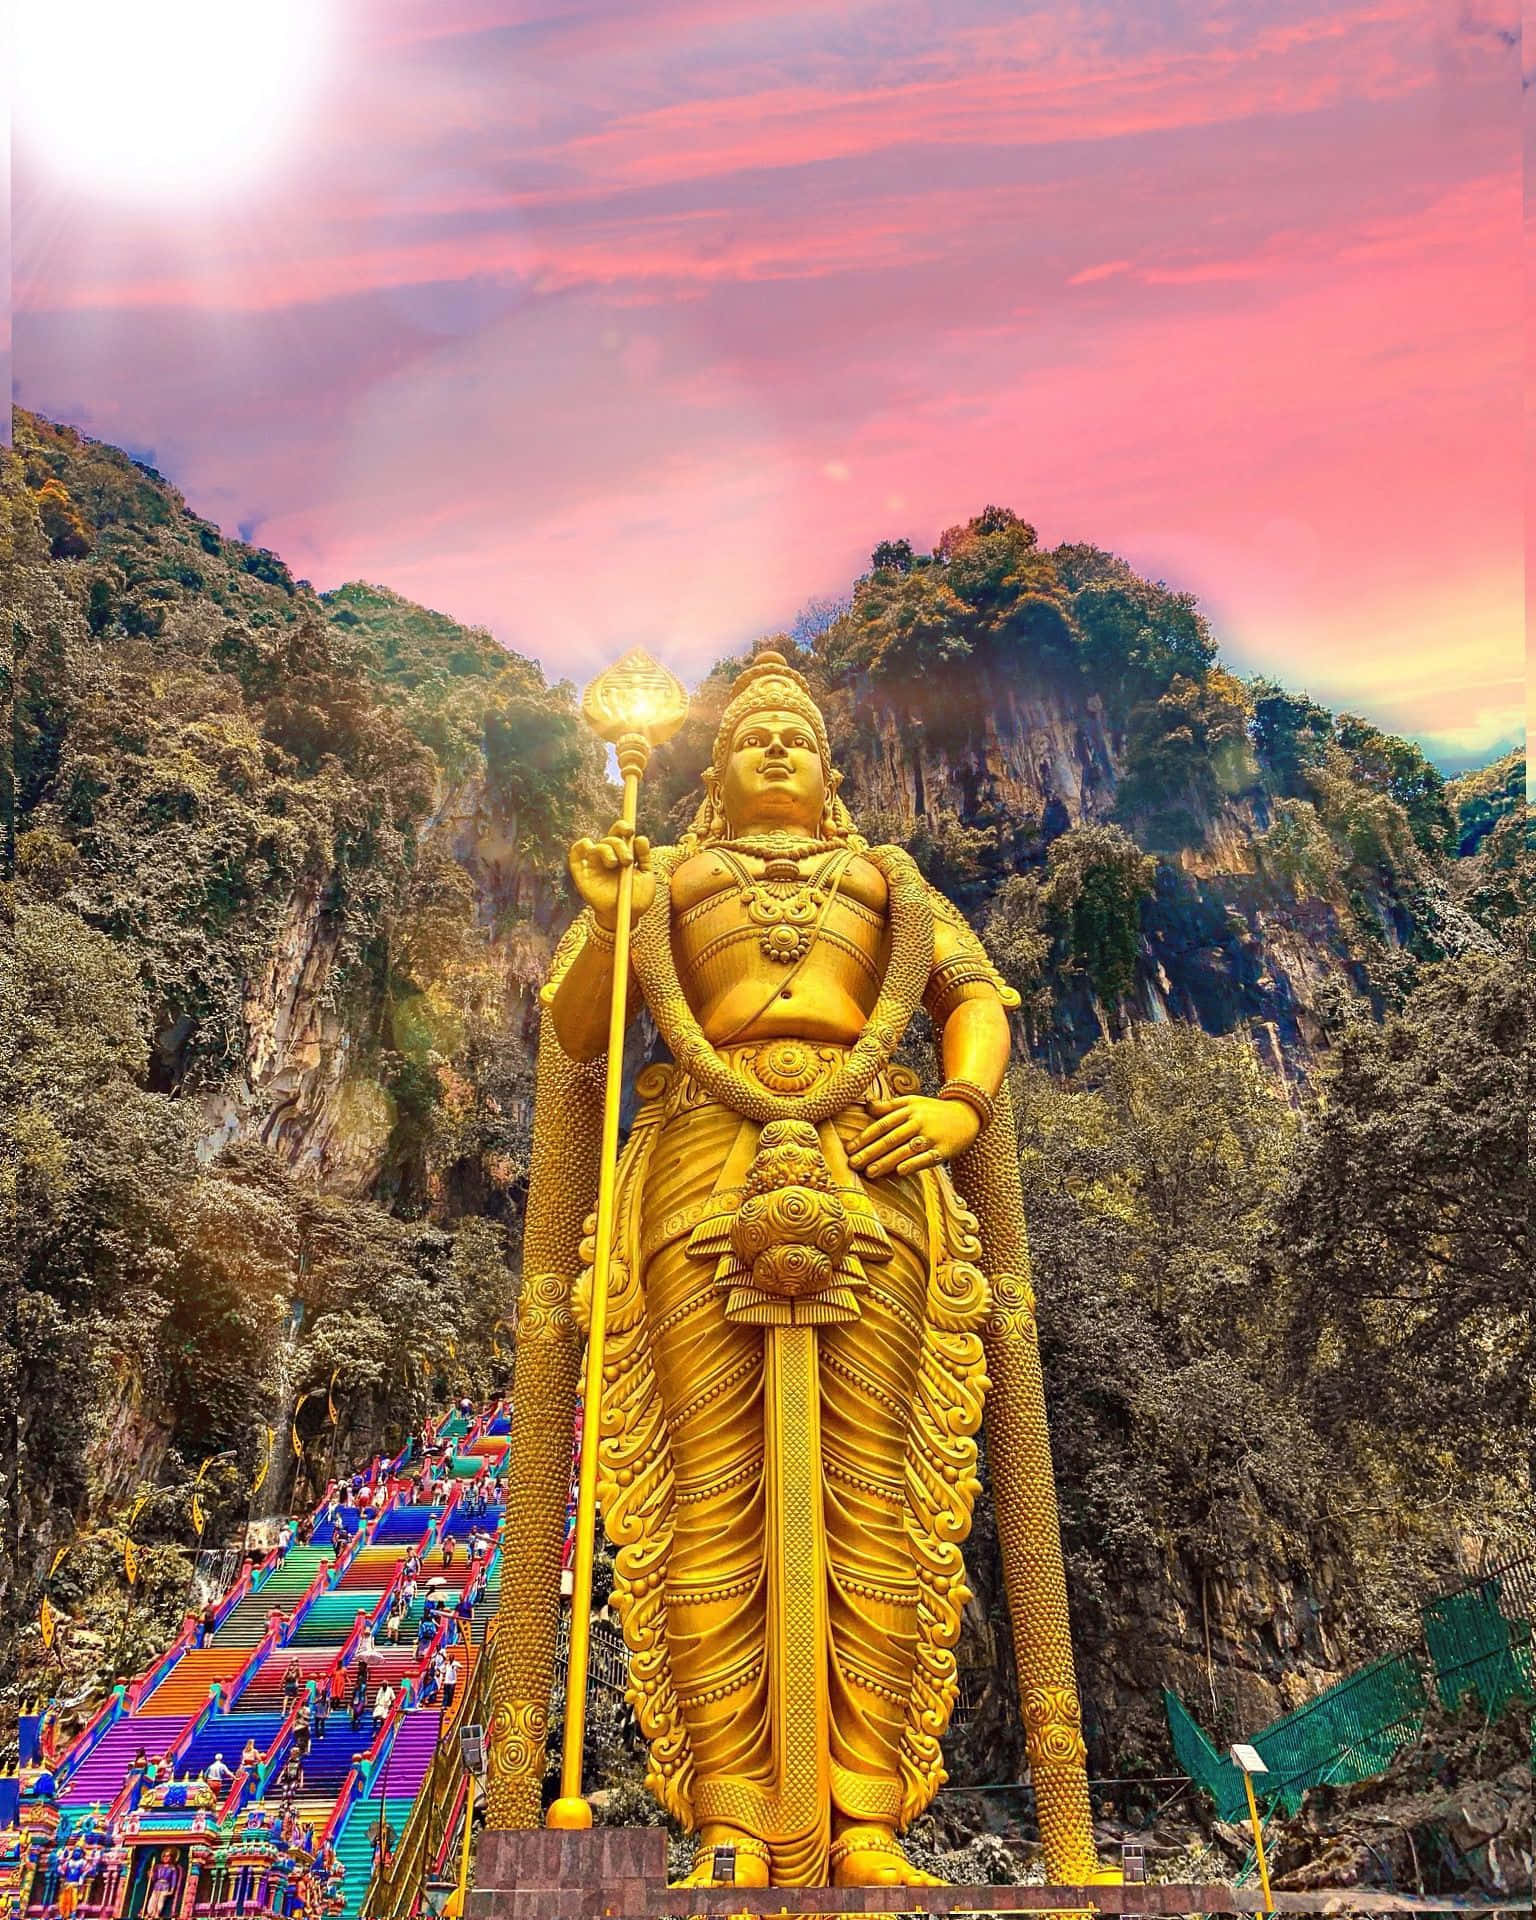 "Shrine to Hindu God Murugan"